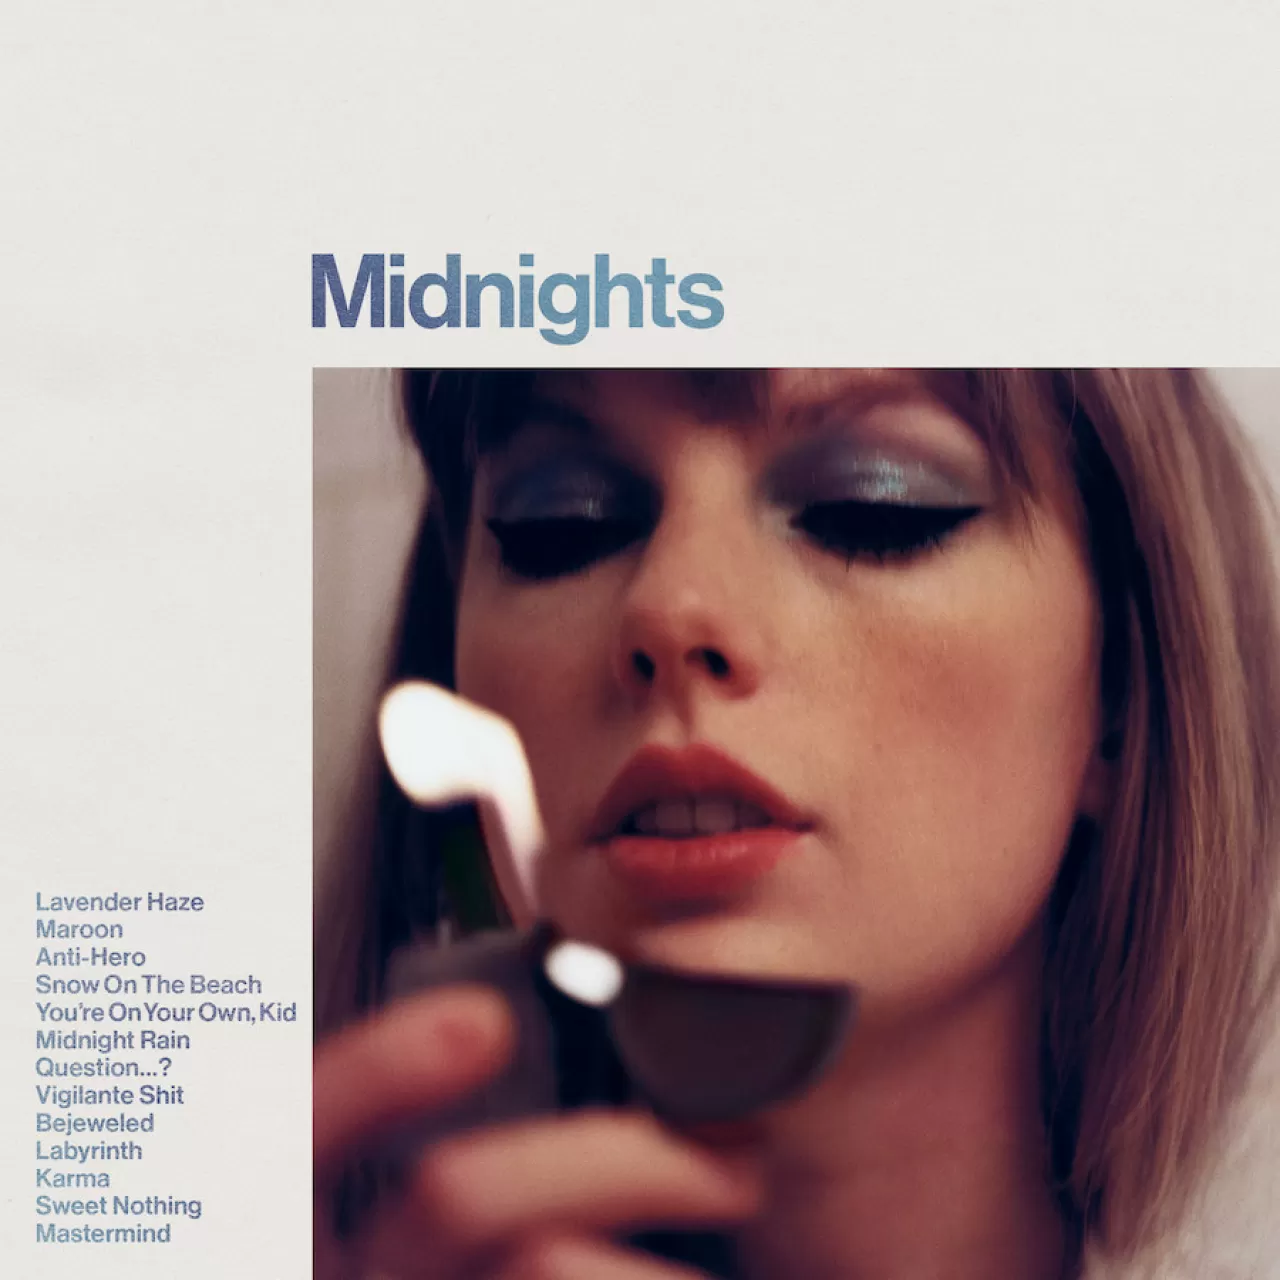 Taylor Swift Midnights img#2